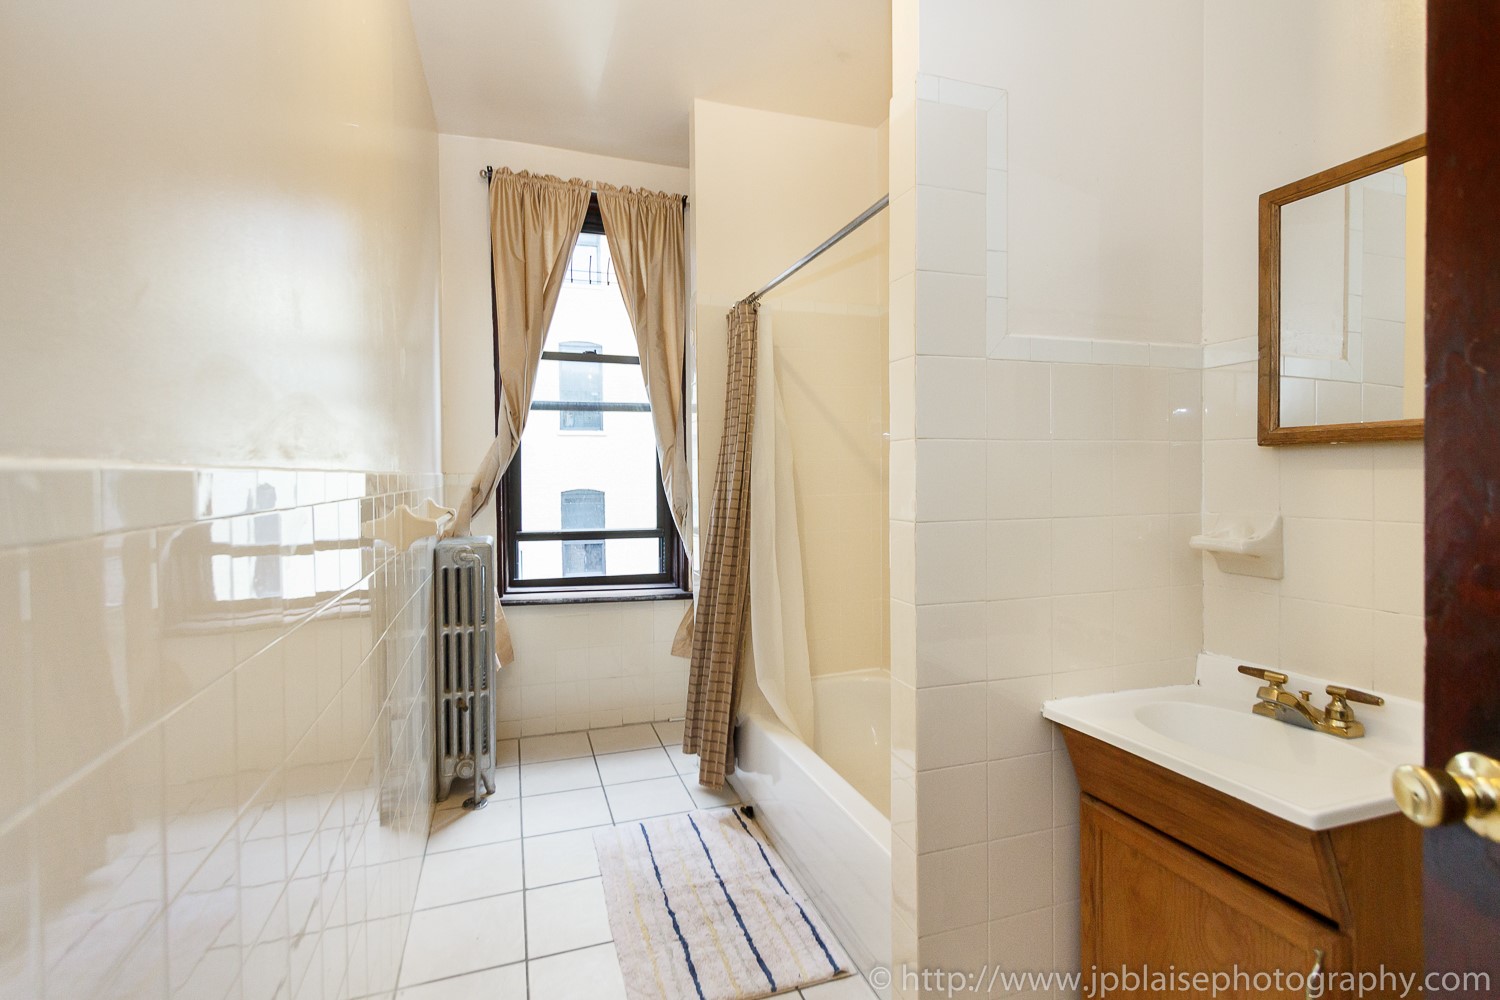 Bathroom picture Apartment photographer work three bedroom apartment in harlem new york